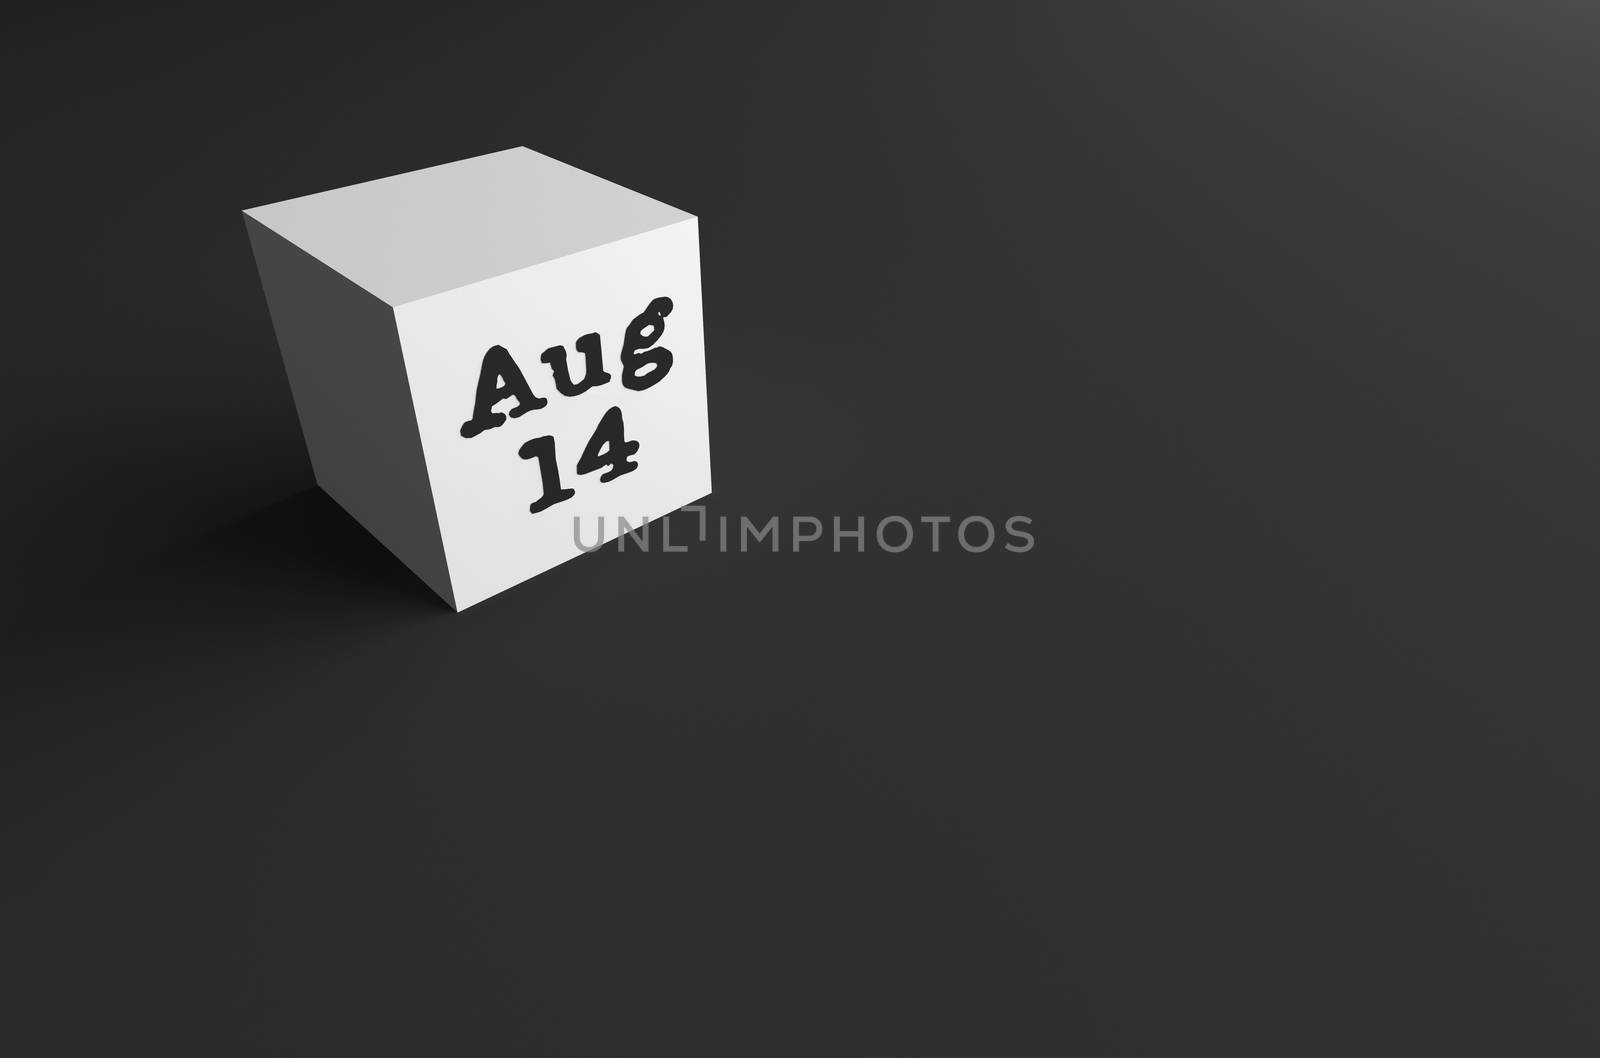 3D RENDERING OF Aug 14 by PrettyTG